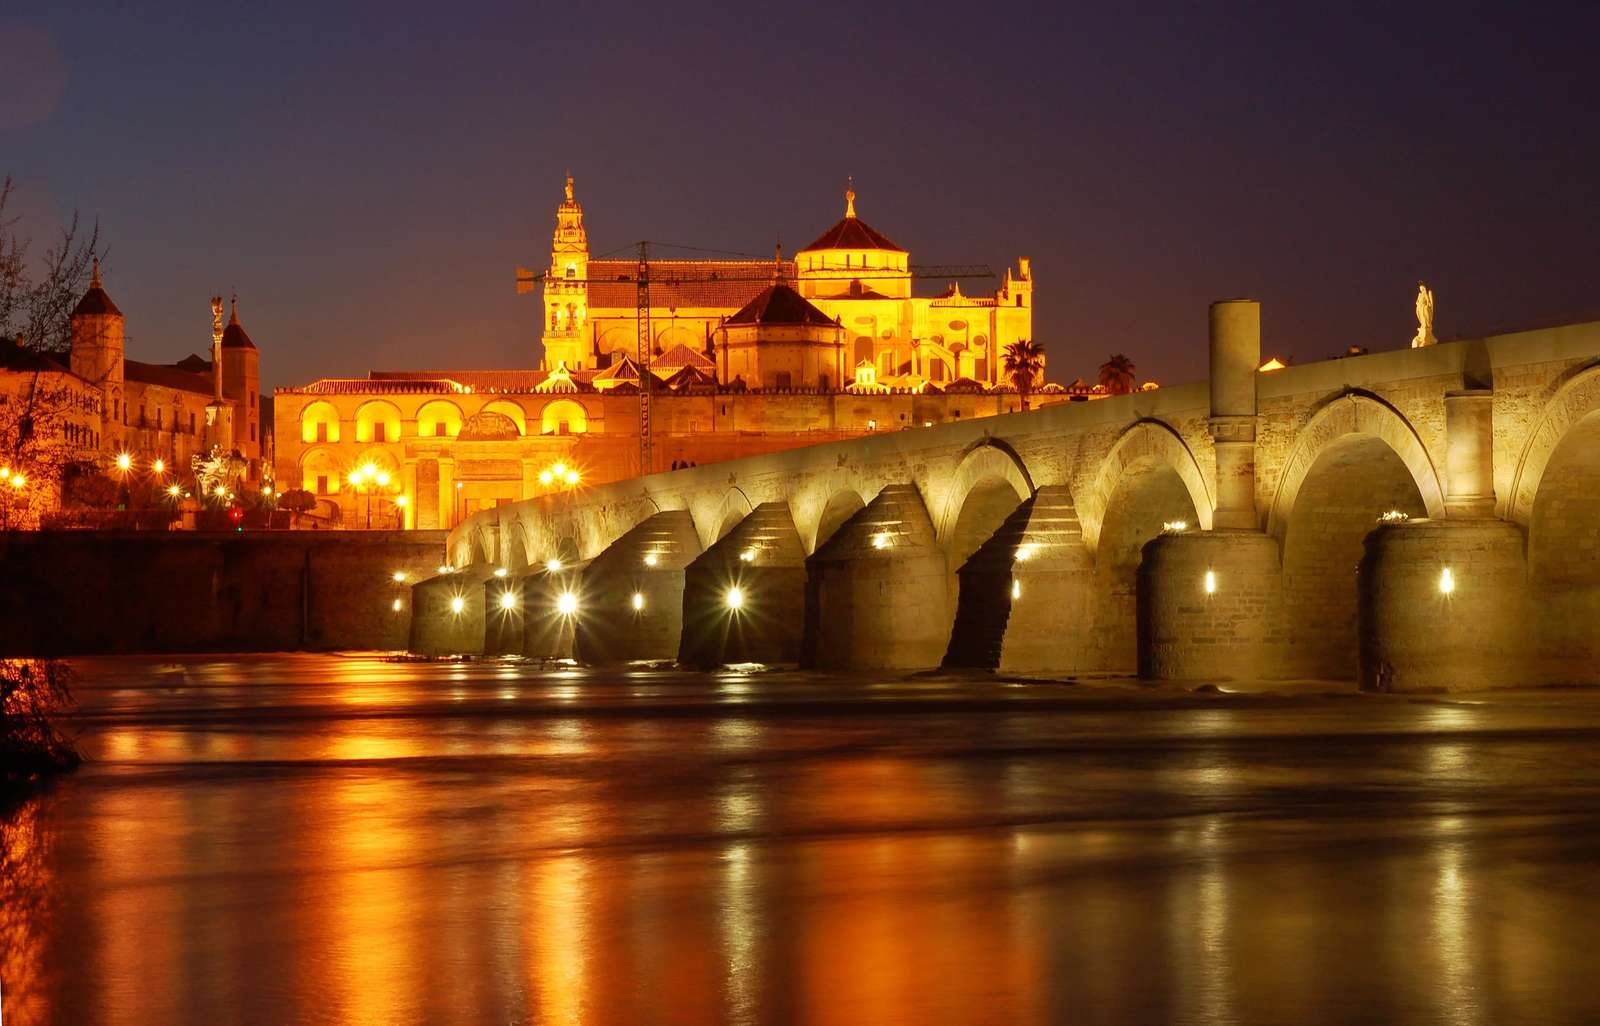 Roman Bridge in Cordoba Spain puzzle online from photo